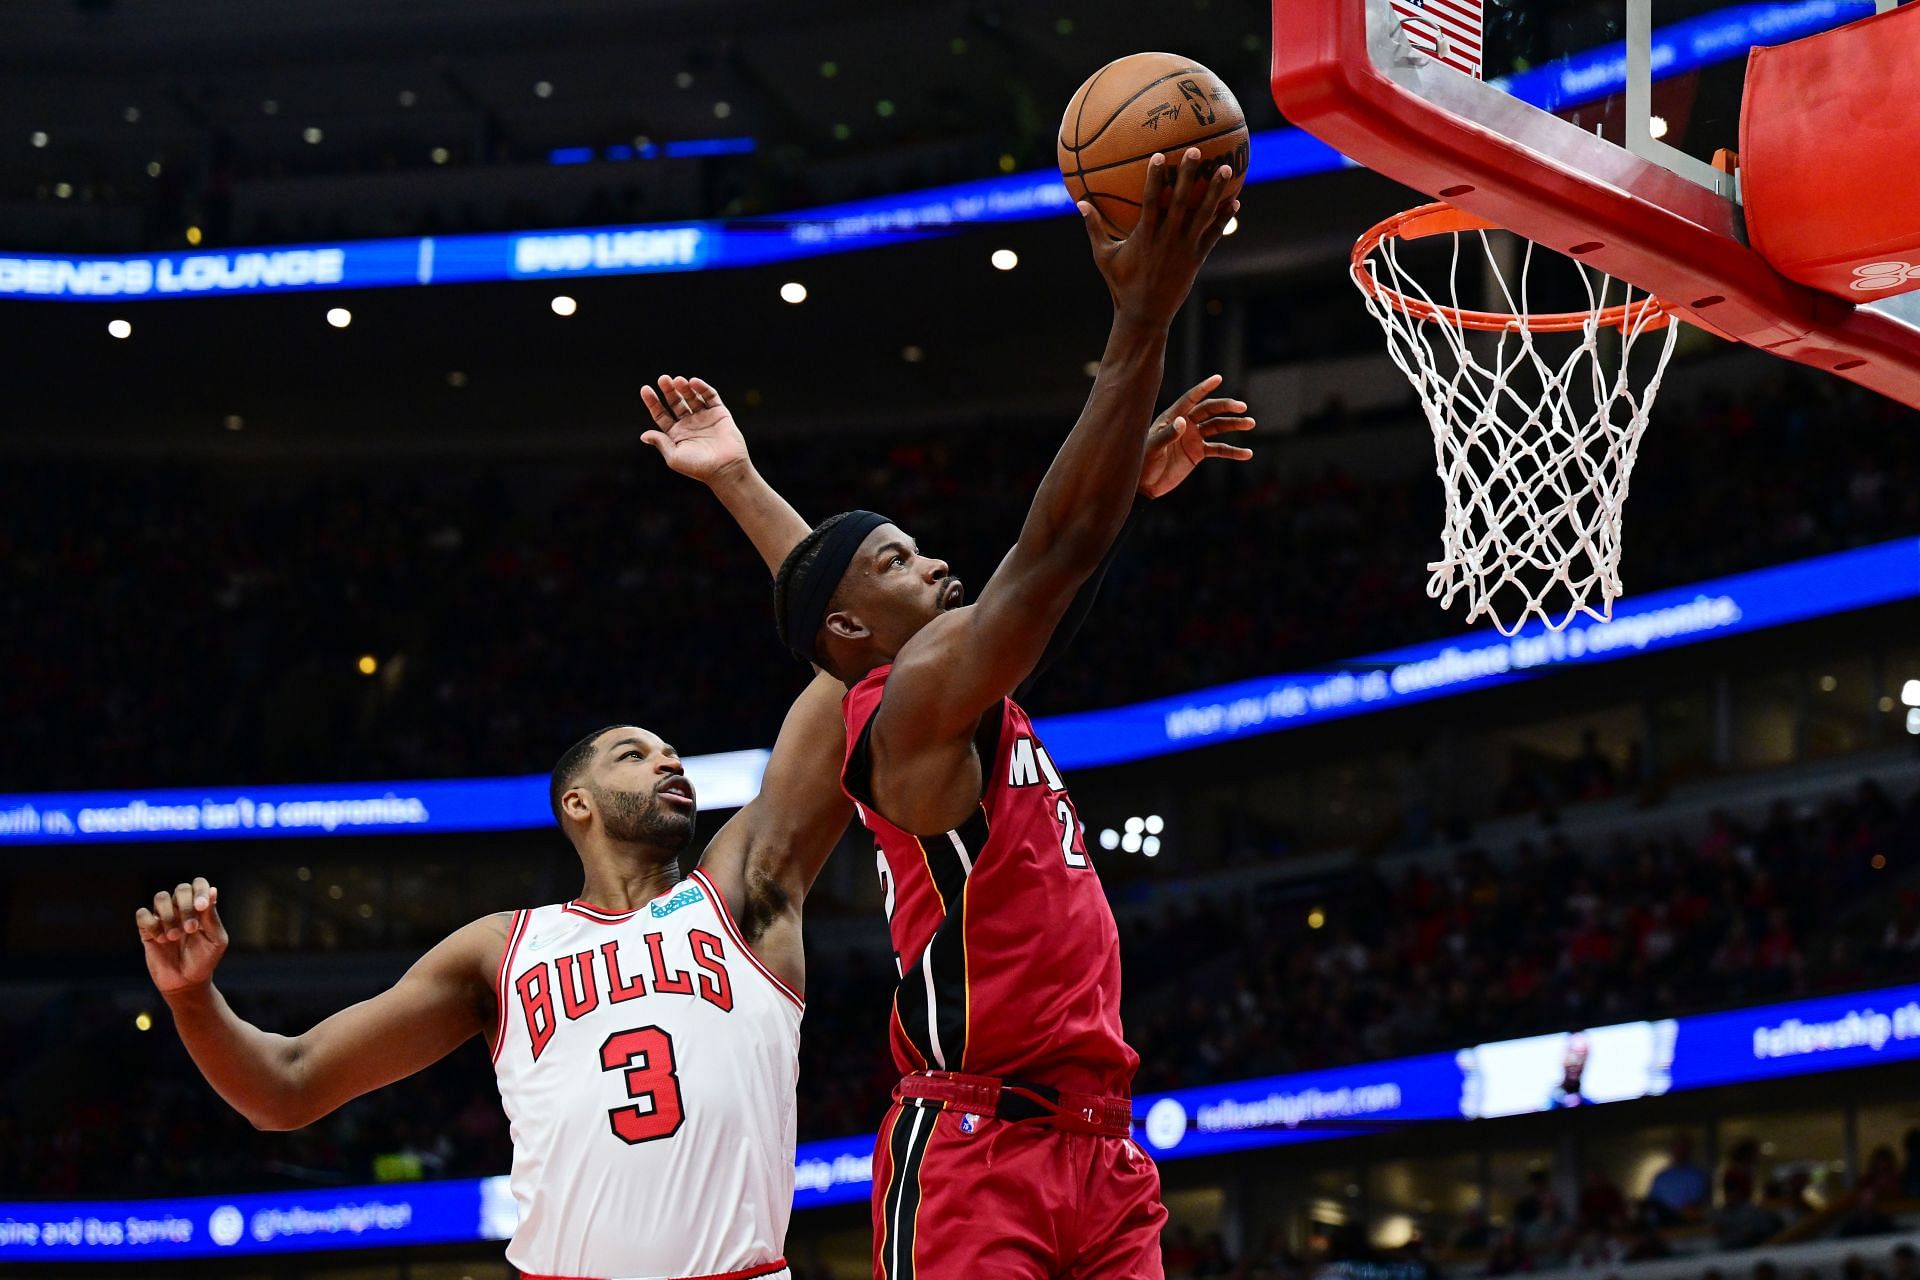 Miami Heat vs. Chicago Bulls: Jimmy Butler shoots a layup